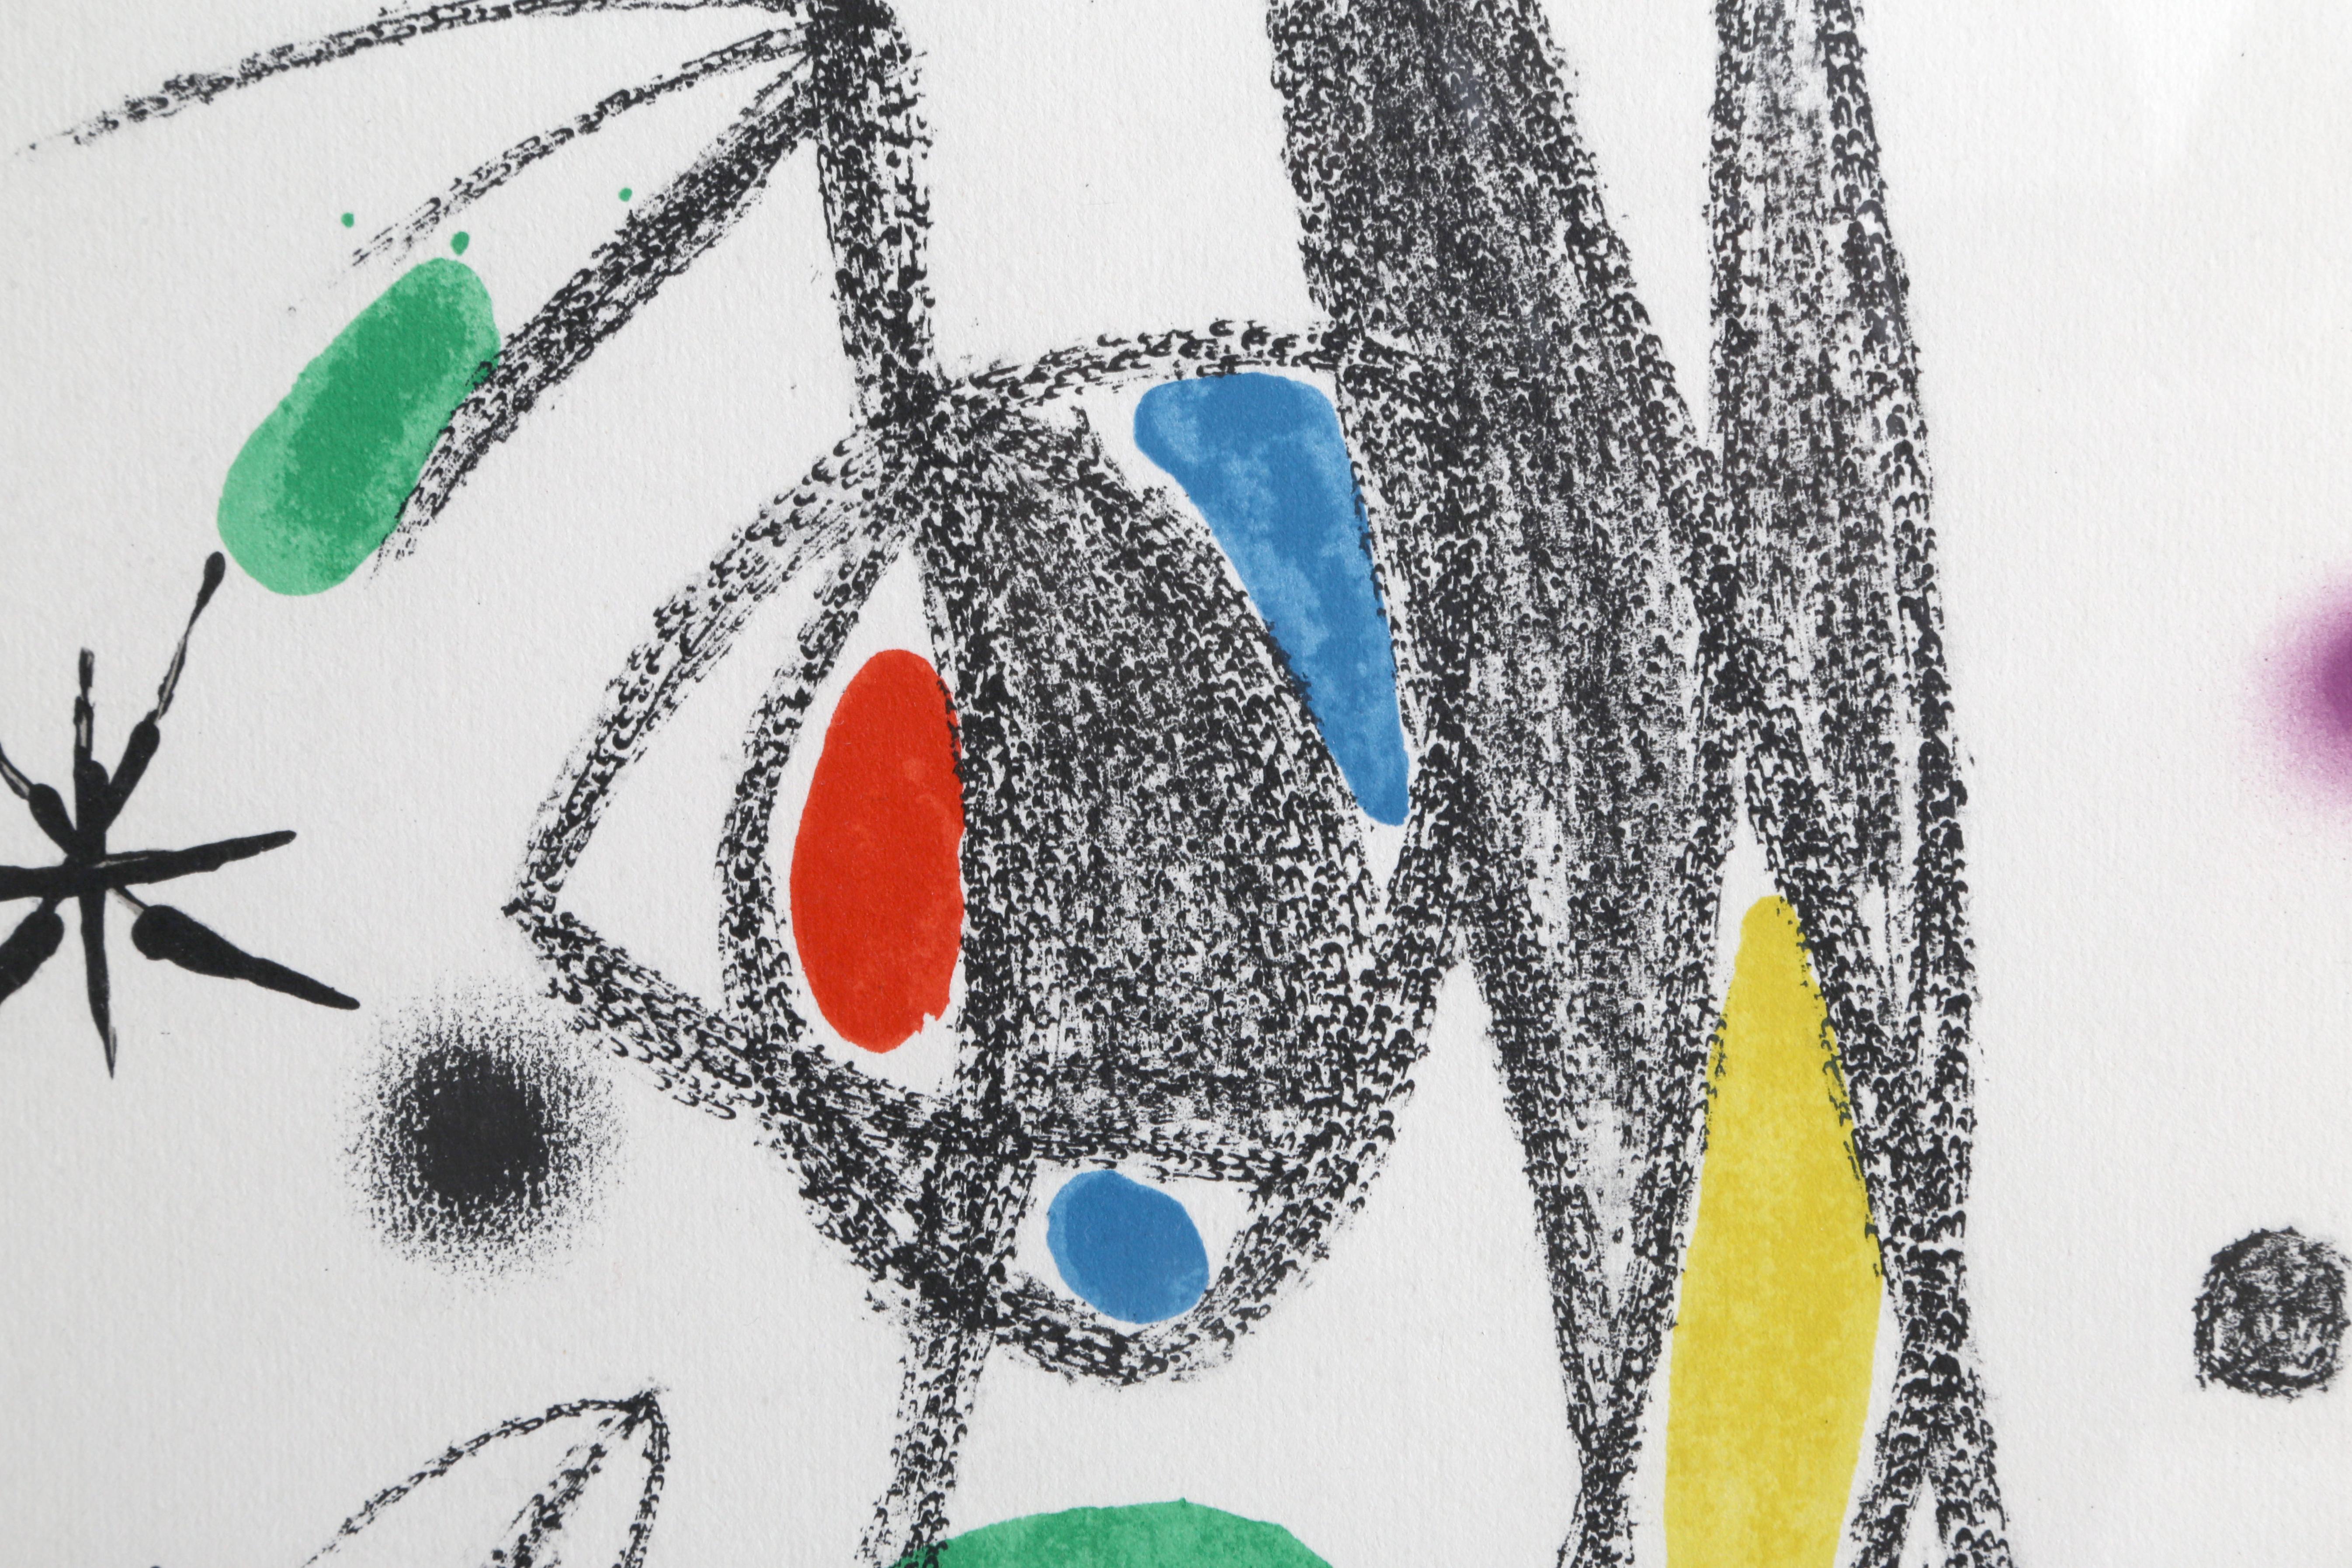 Artist: Joan Miro, Spanish (1893 - 1983)
Title: Maravillas con Variaciones Acrosticas en el jardin de Miro (Number 16)
Year: 1975
Medium: Lithograph, signed in the plate
Edition: 1500
Size: 19.5 in. x 14 in. (49.53 cm x 35.56 cm)
Frame Size: 27 x 21